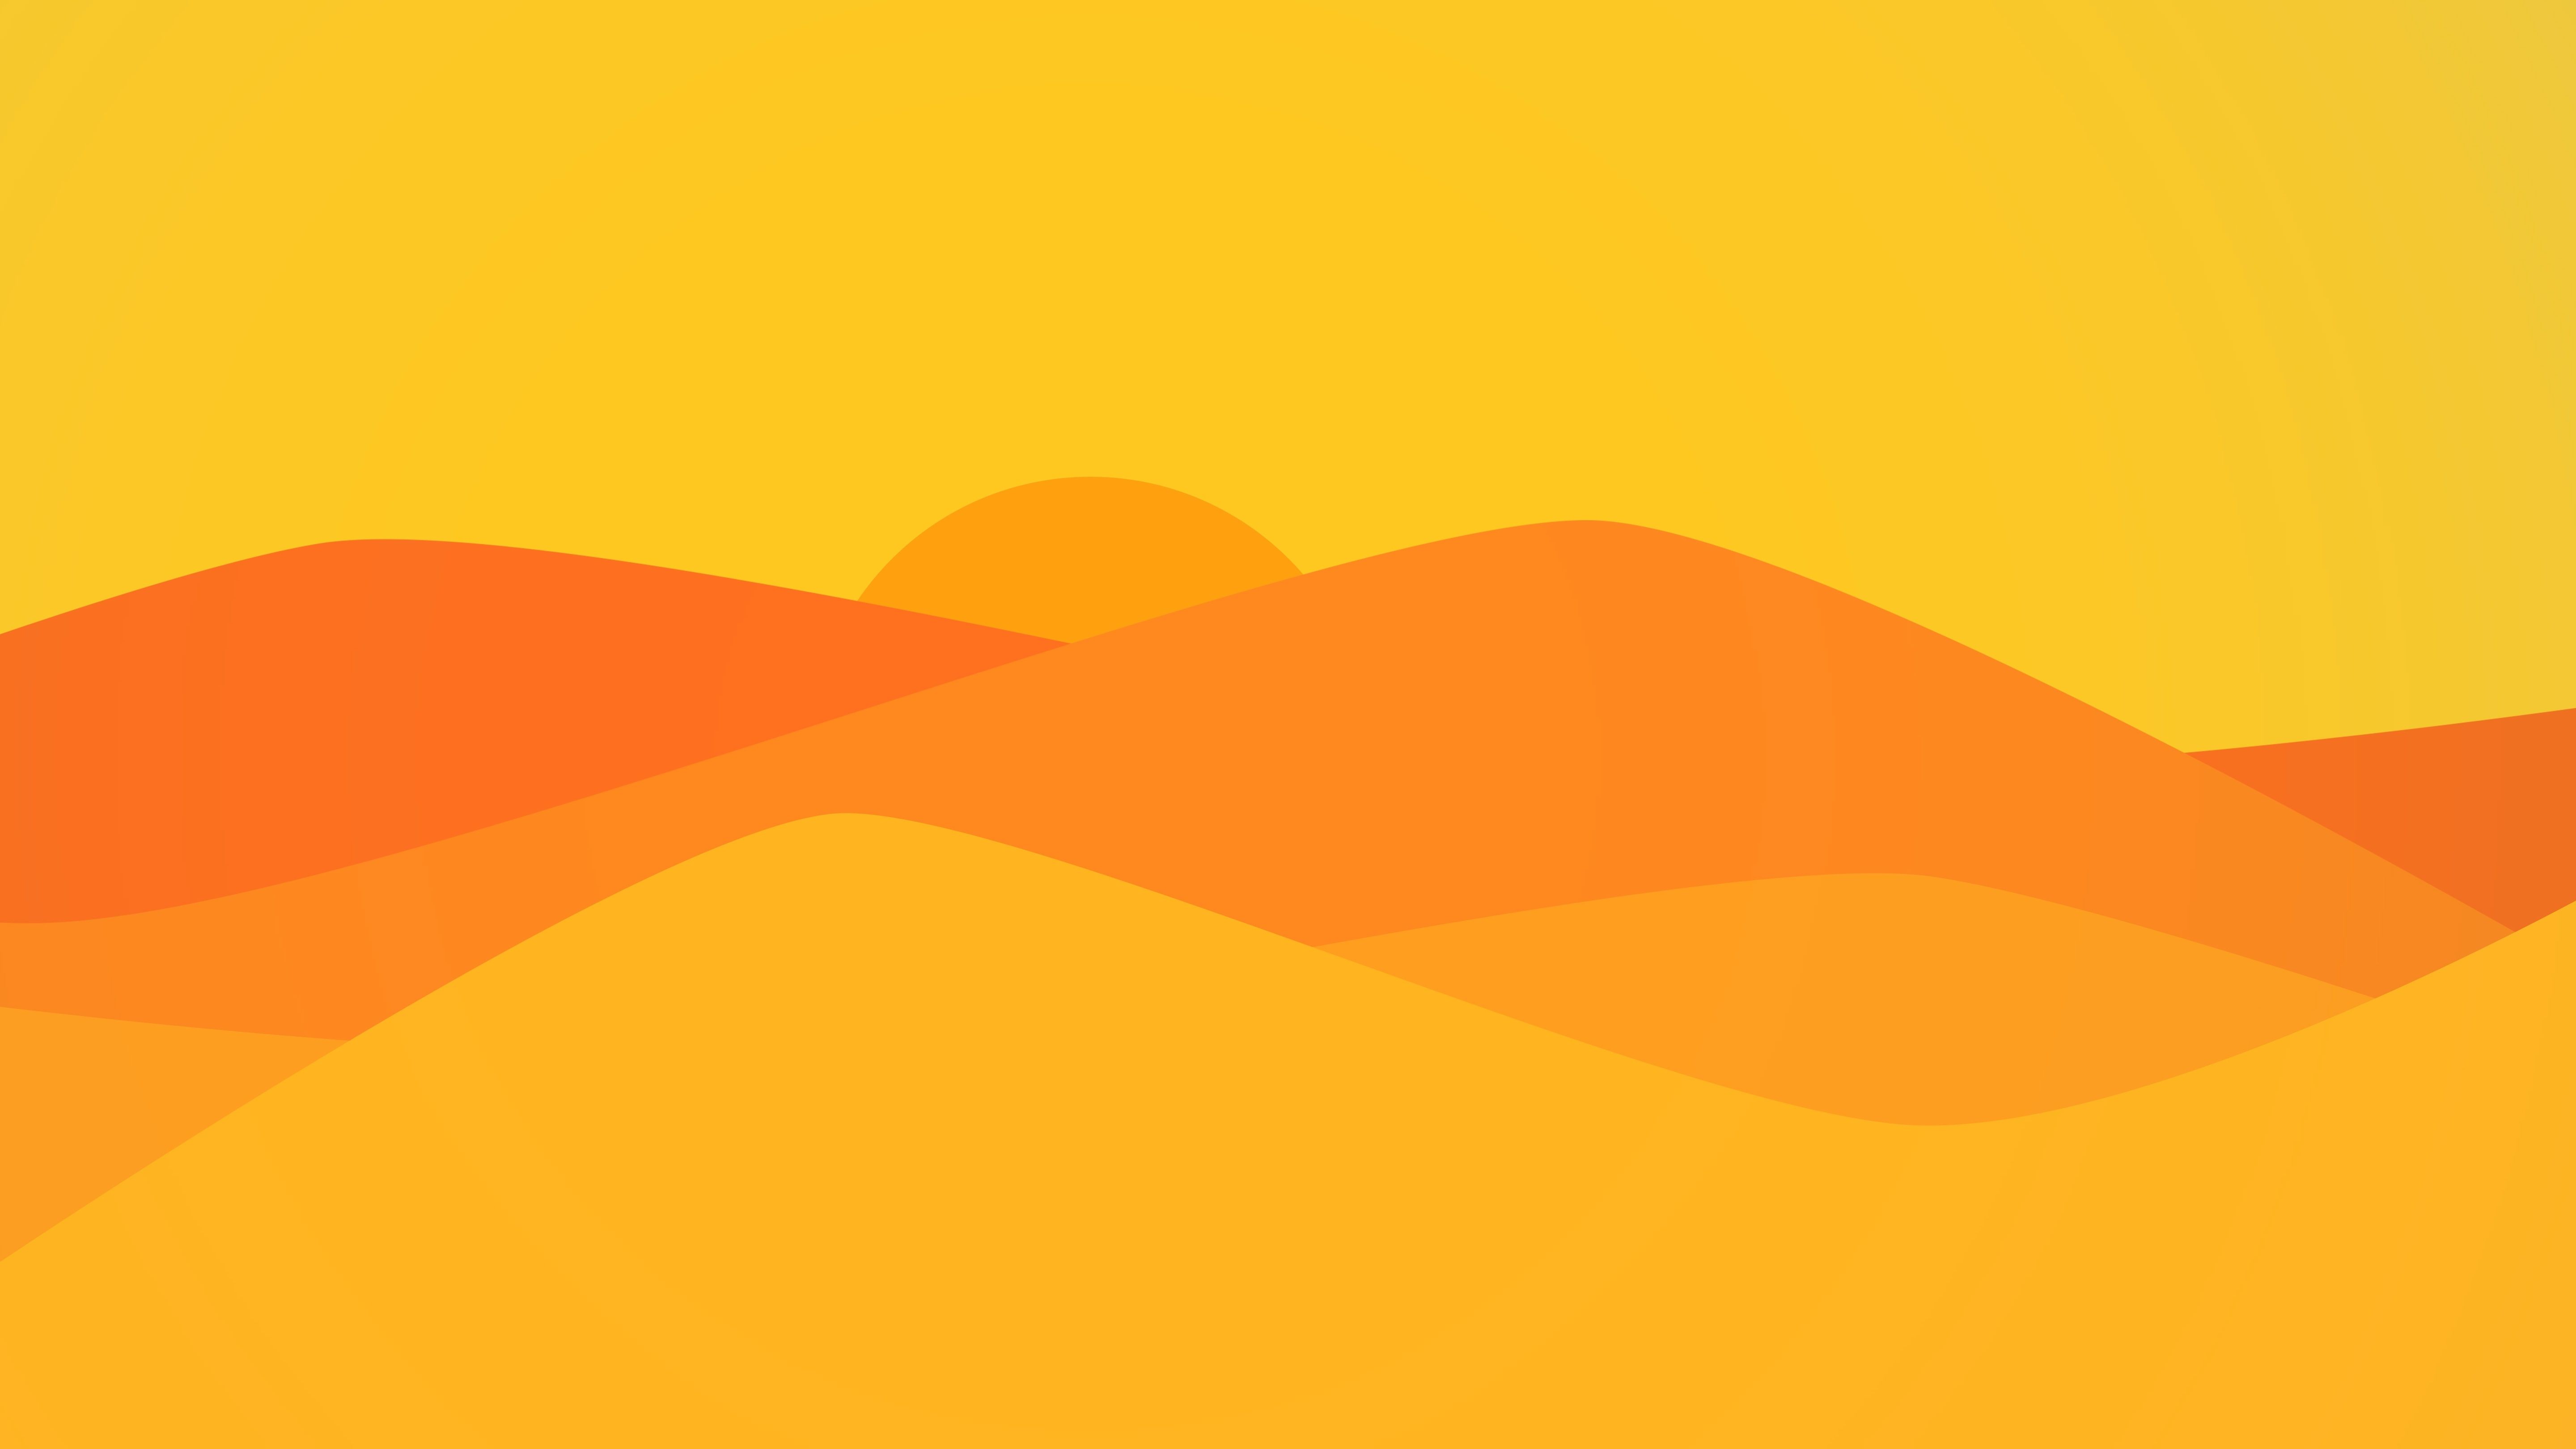 Background Minimalist Orange Yellow  Download Free photos